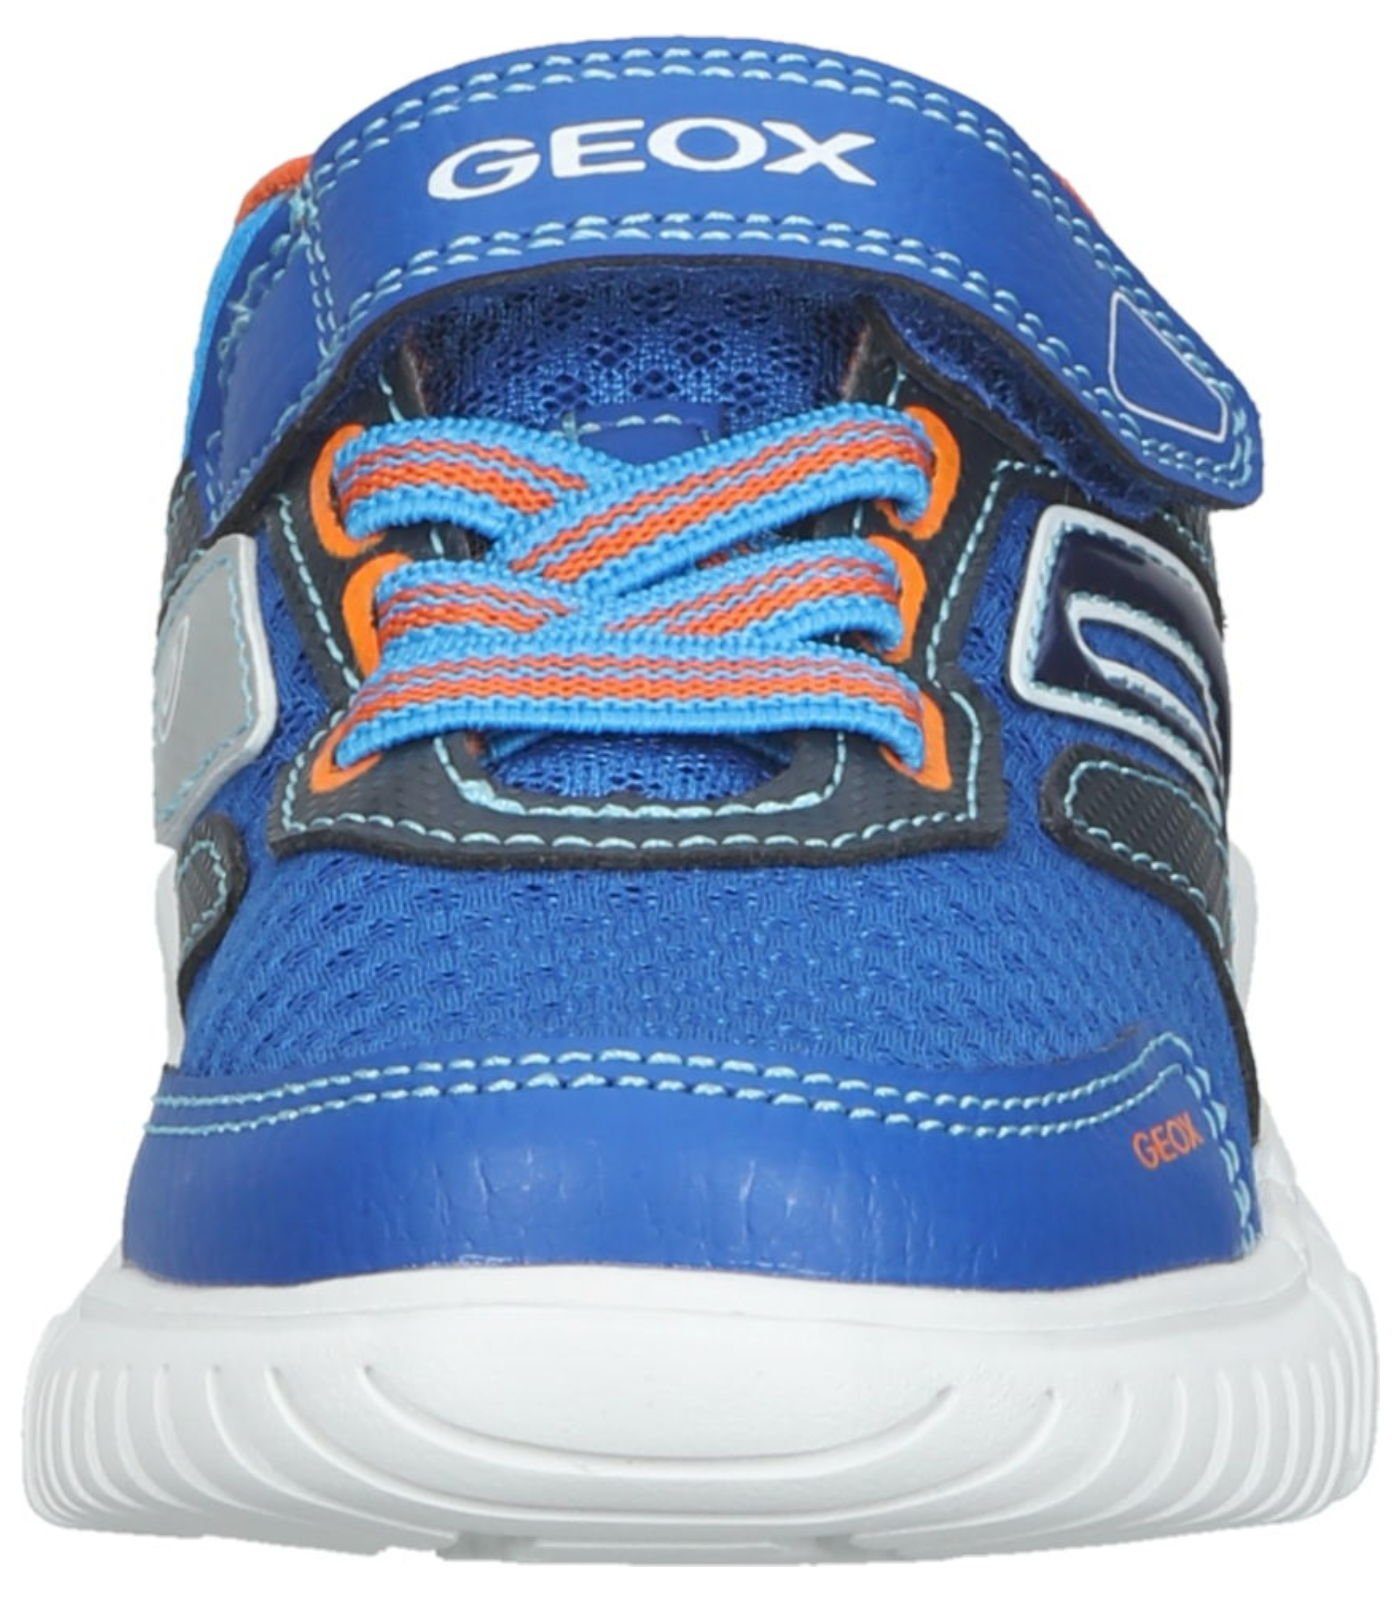 (ROYAL/ORANGE) Lederimitat/Textil Geox Sneaker Blau Sneaker